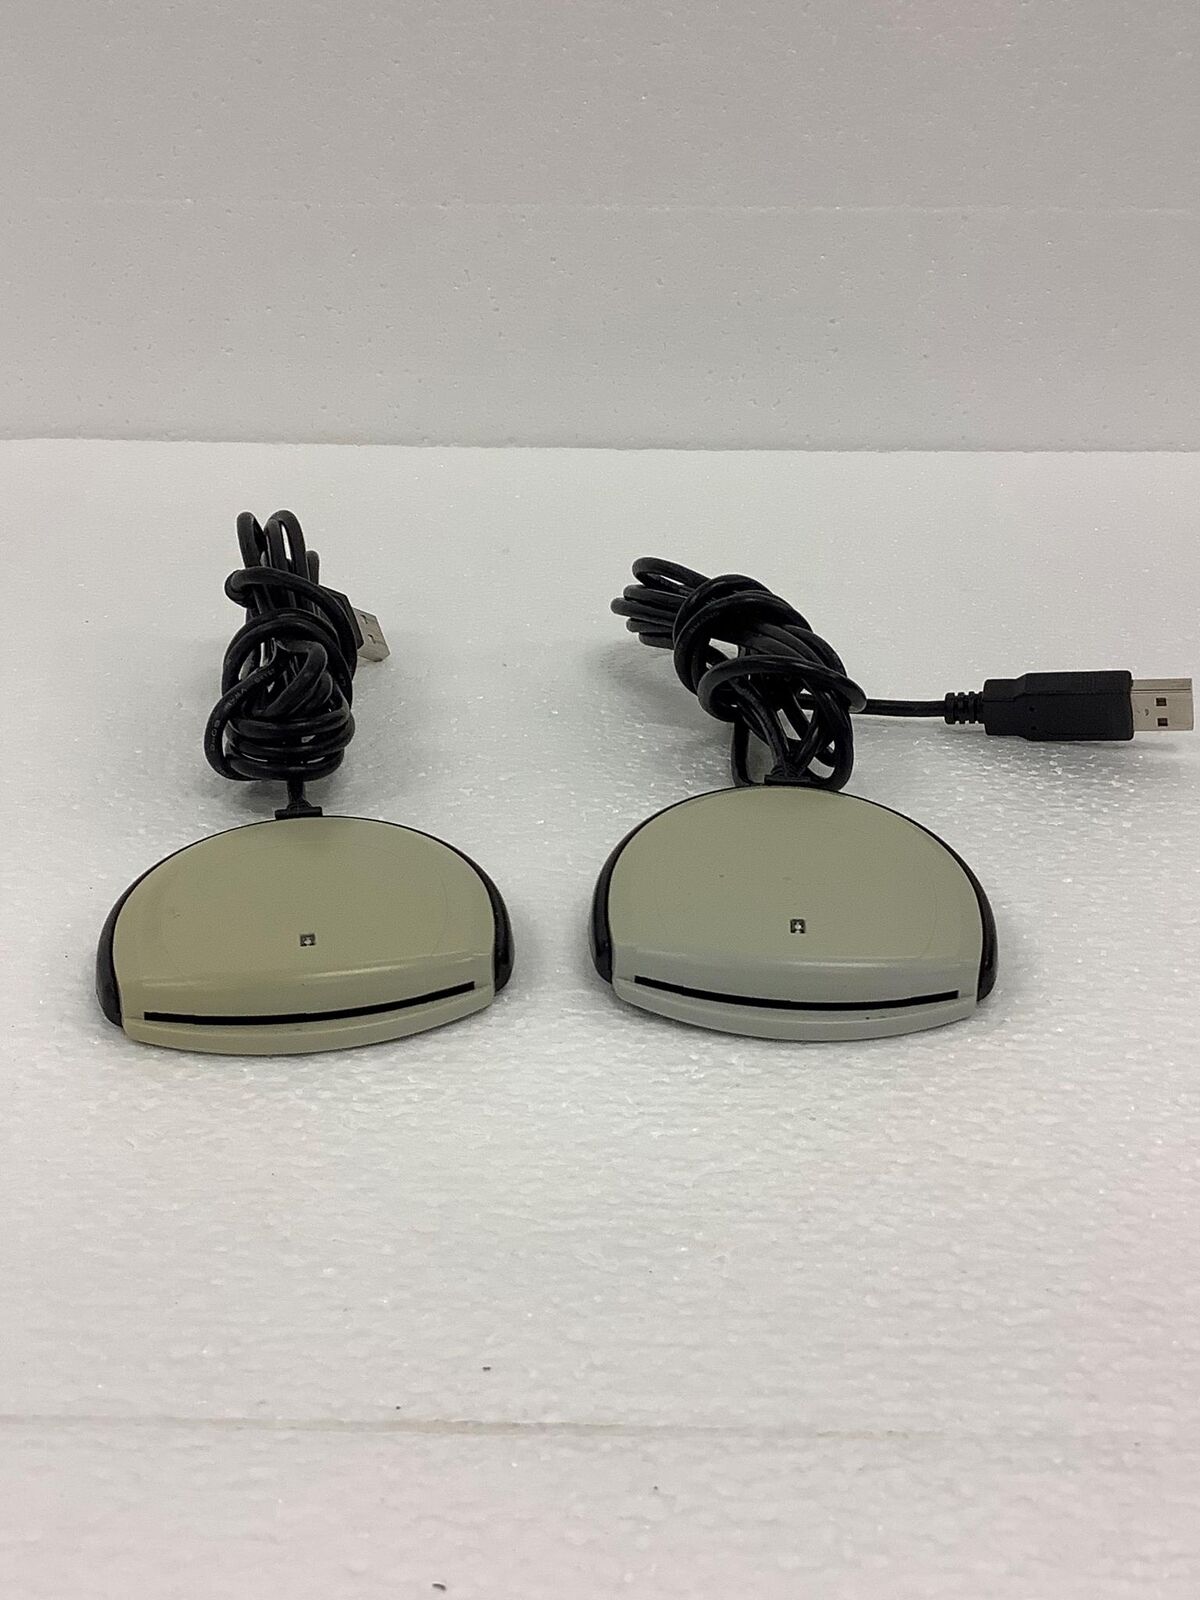 2x IDENTIV SCR3310 v2.0 SmartOS Powered Smart Card Reader w/USB Cable, WORKING